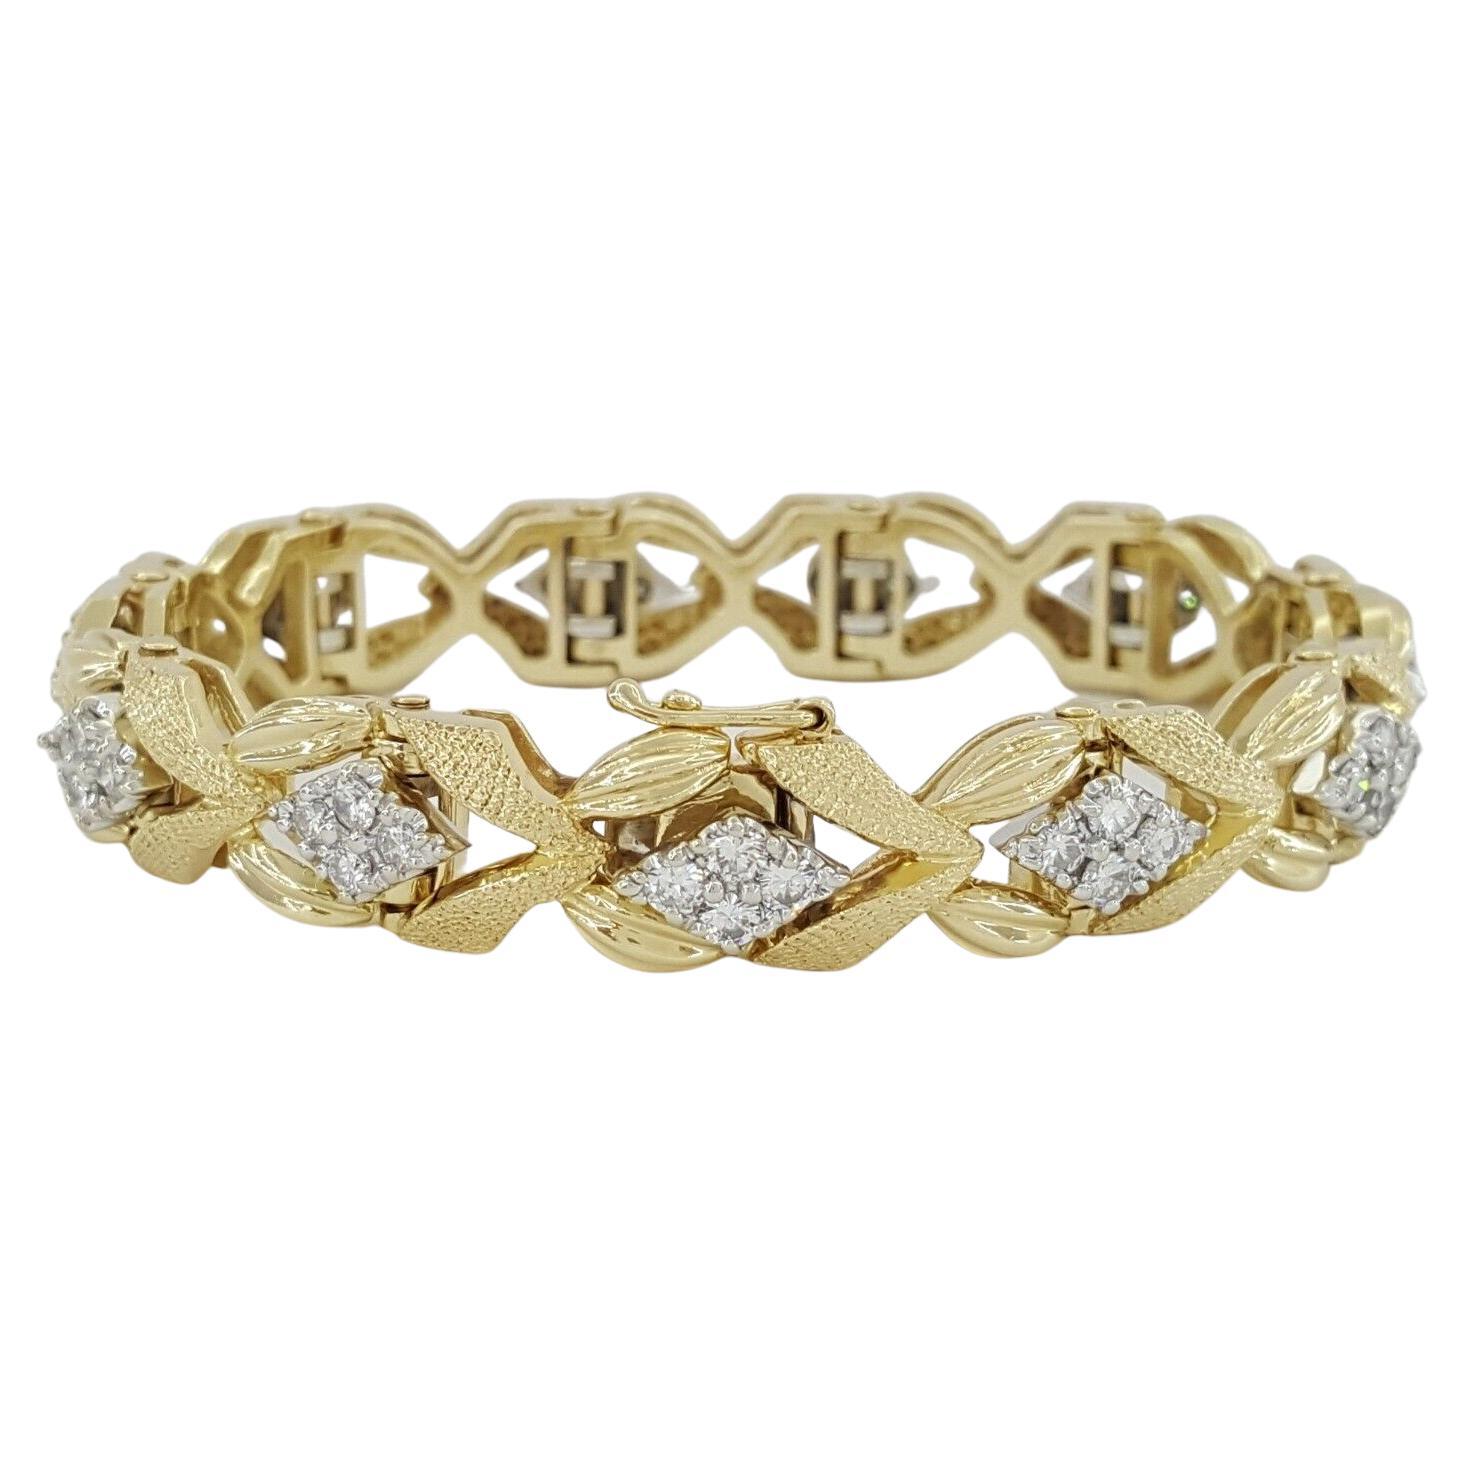 Vintage Authentic Diamond and Yellow Gold Bracelet